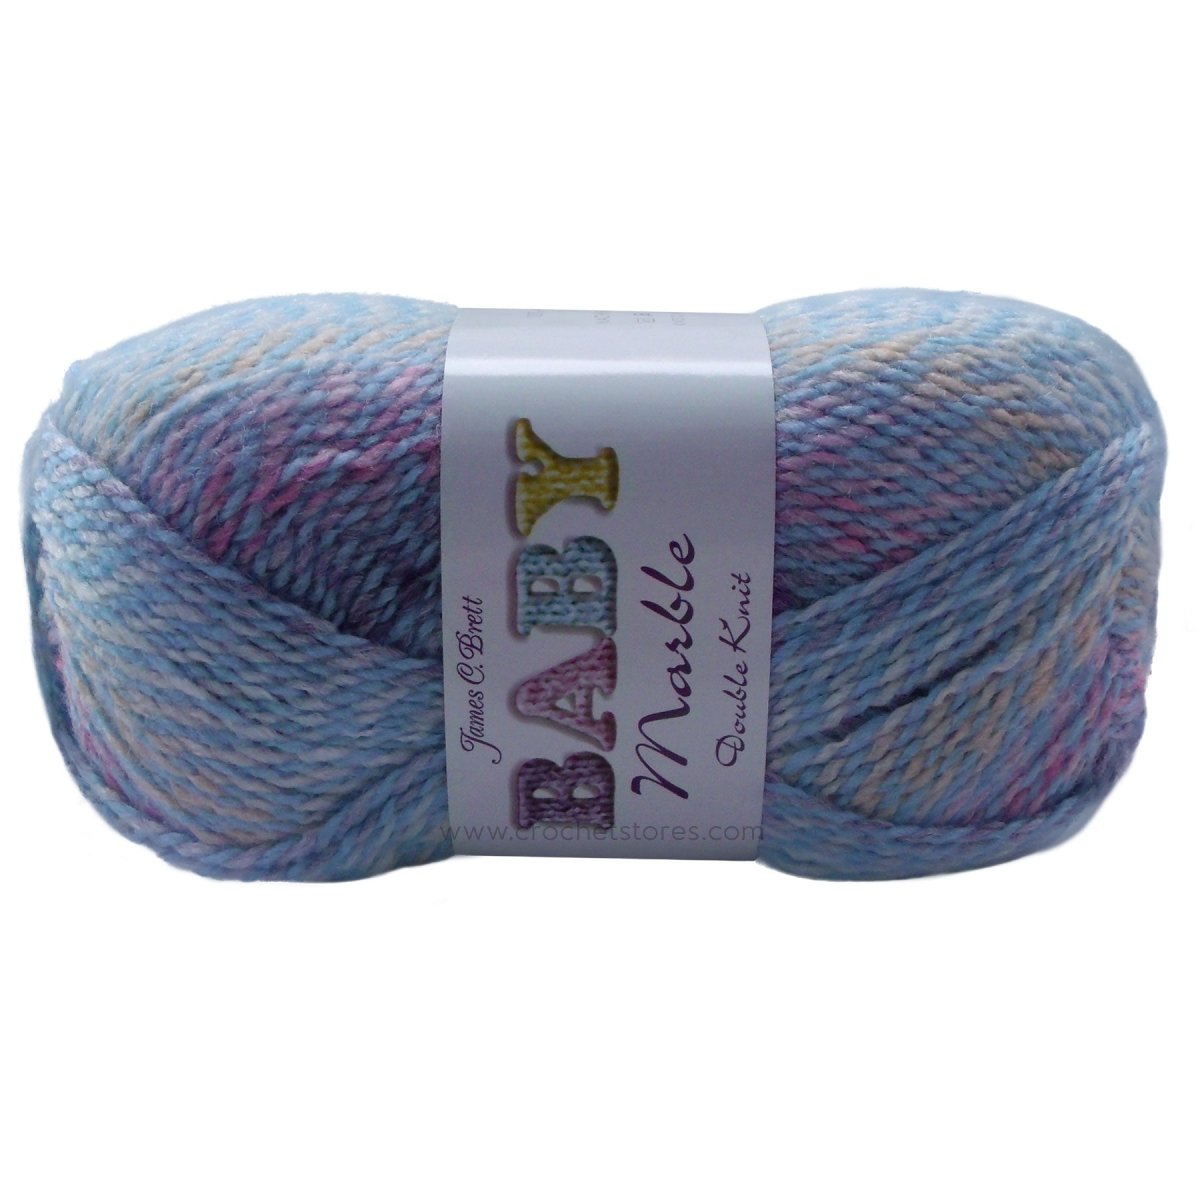 BABY MARBLE DK - CrochetstoresBM135060019099599